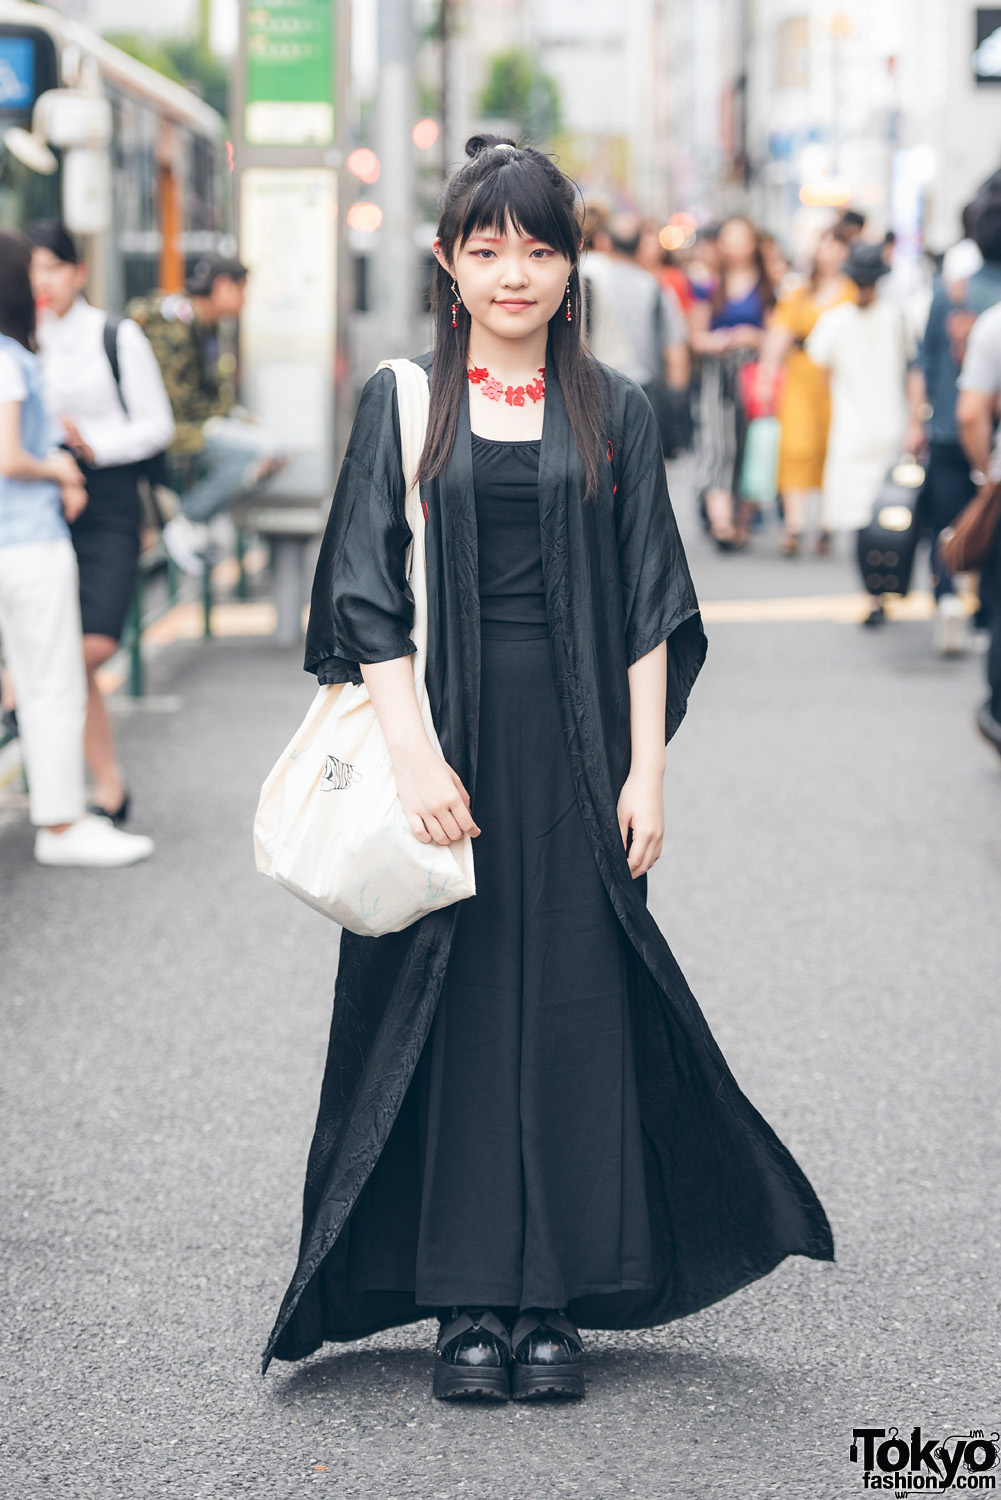 Harajuku Girl in Long Black Dragon Coat w/ Hoyajuku, Mikansei, Yosuke ...